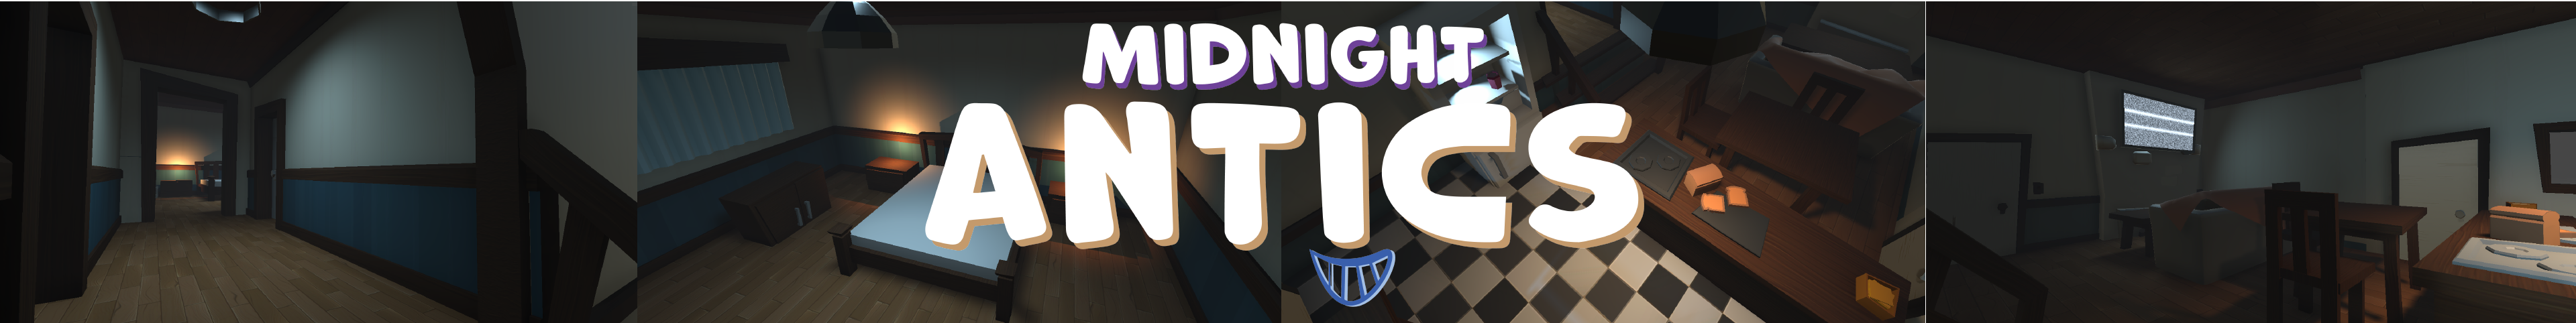 Midnight Antics